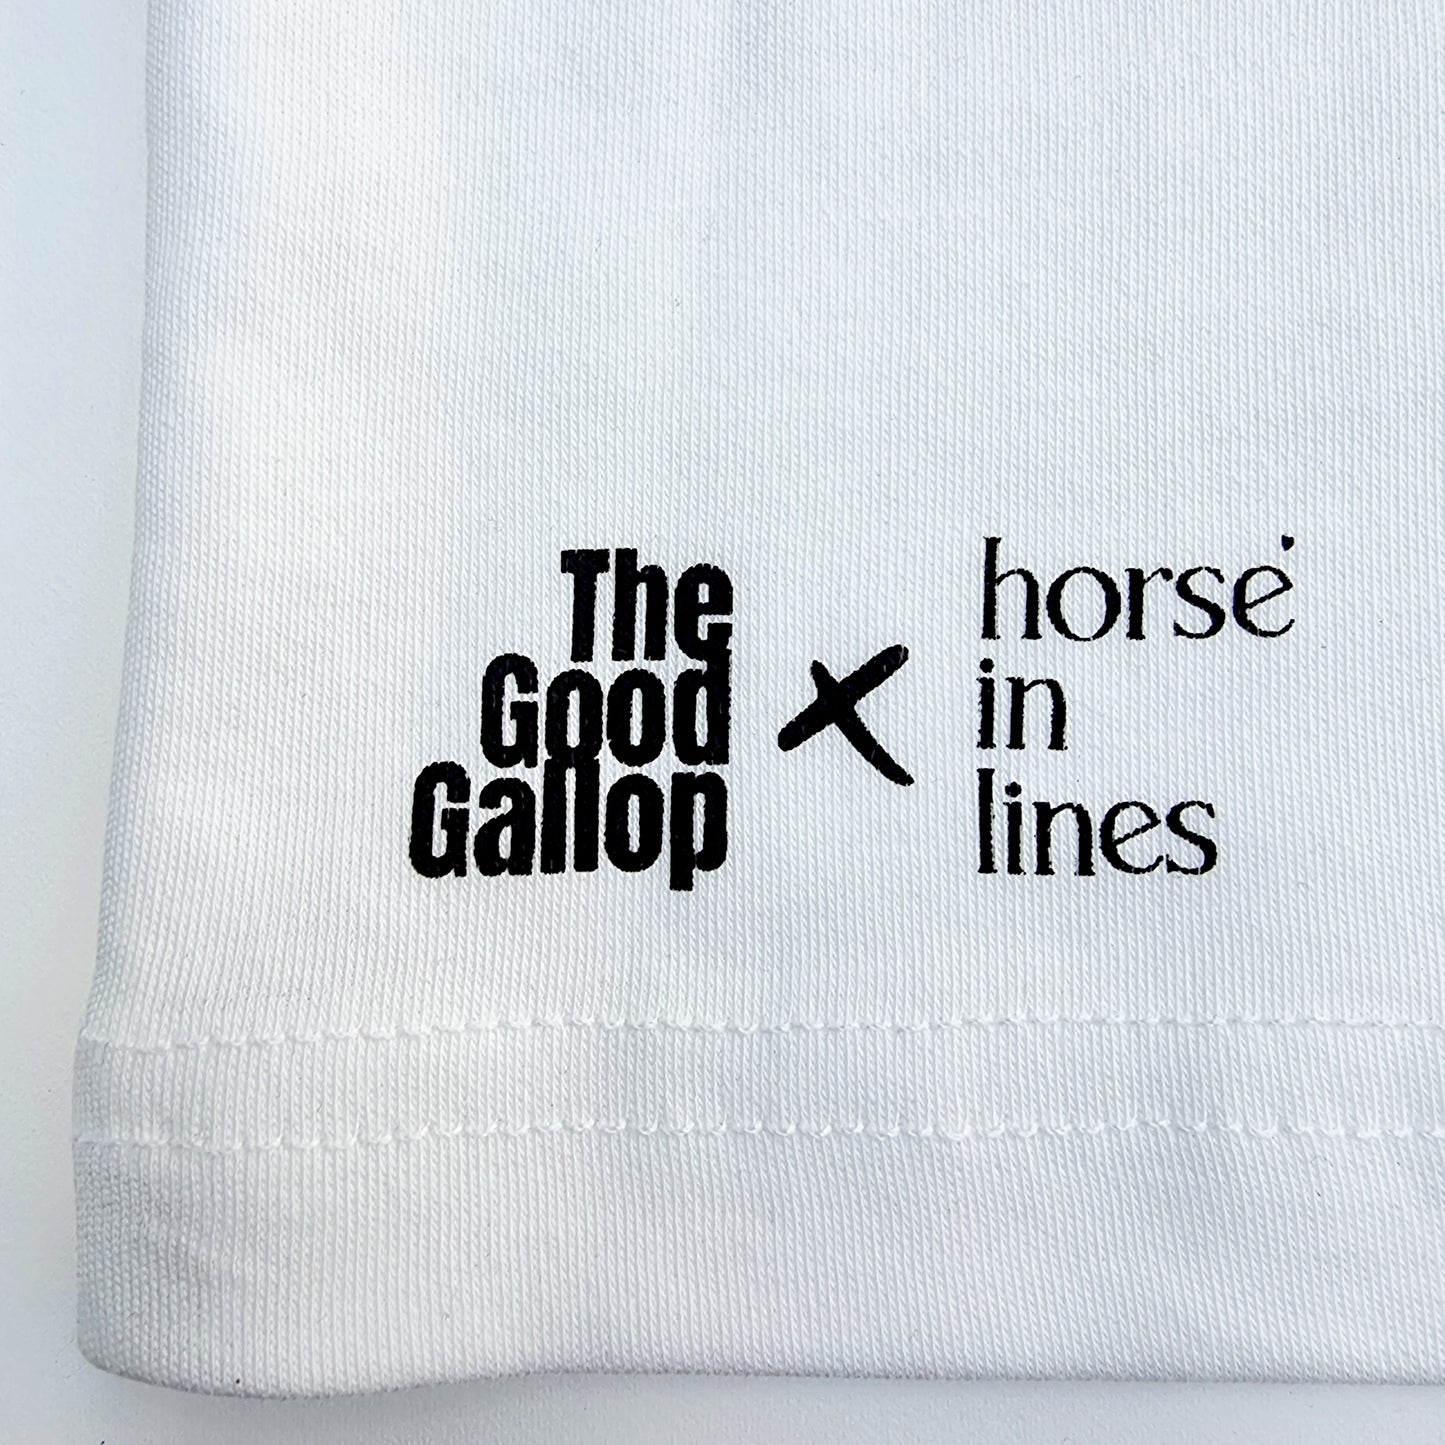 The Good Gallop X HorseInLines oversize arT-shirts